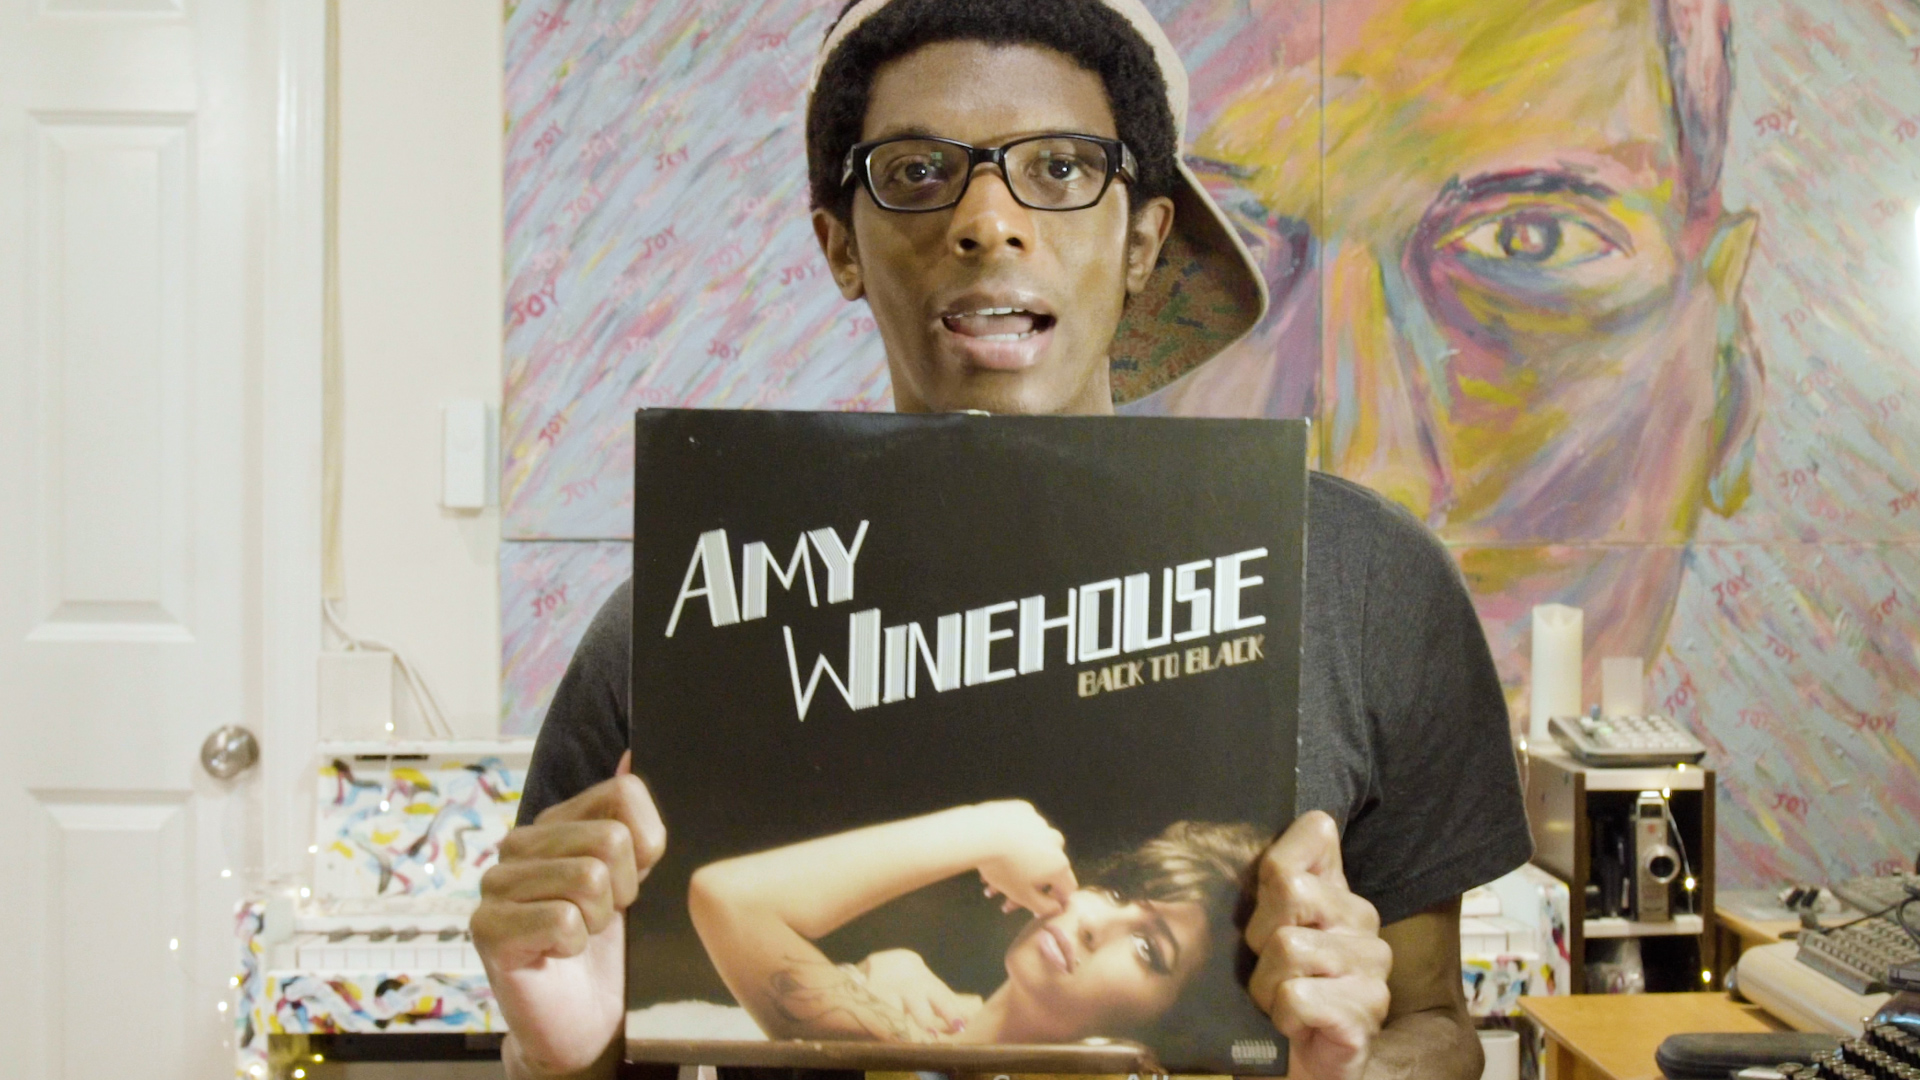 Amy Winehouse – Back to Black – Album – Vinyl Record – WHAT’S INSIDE??